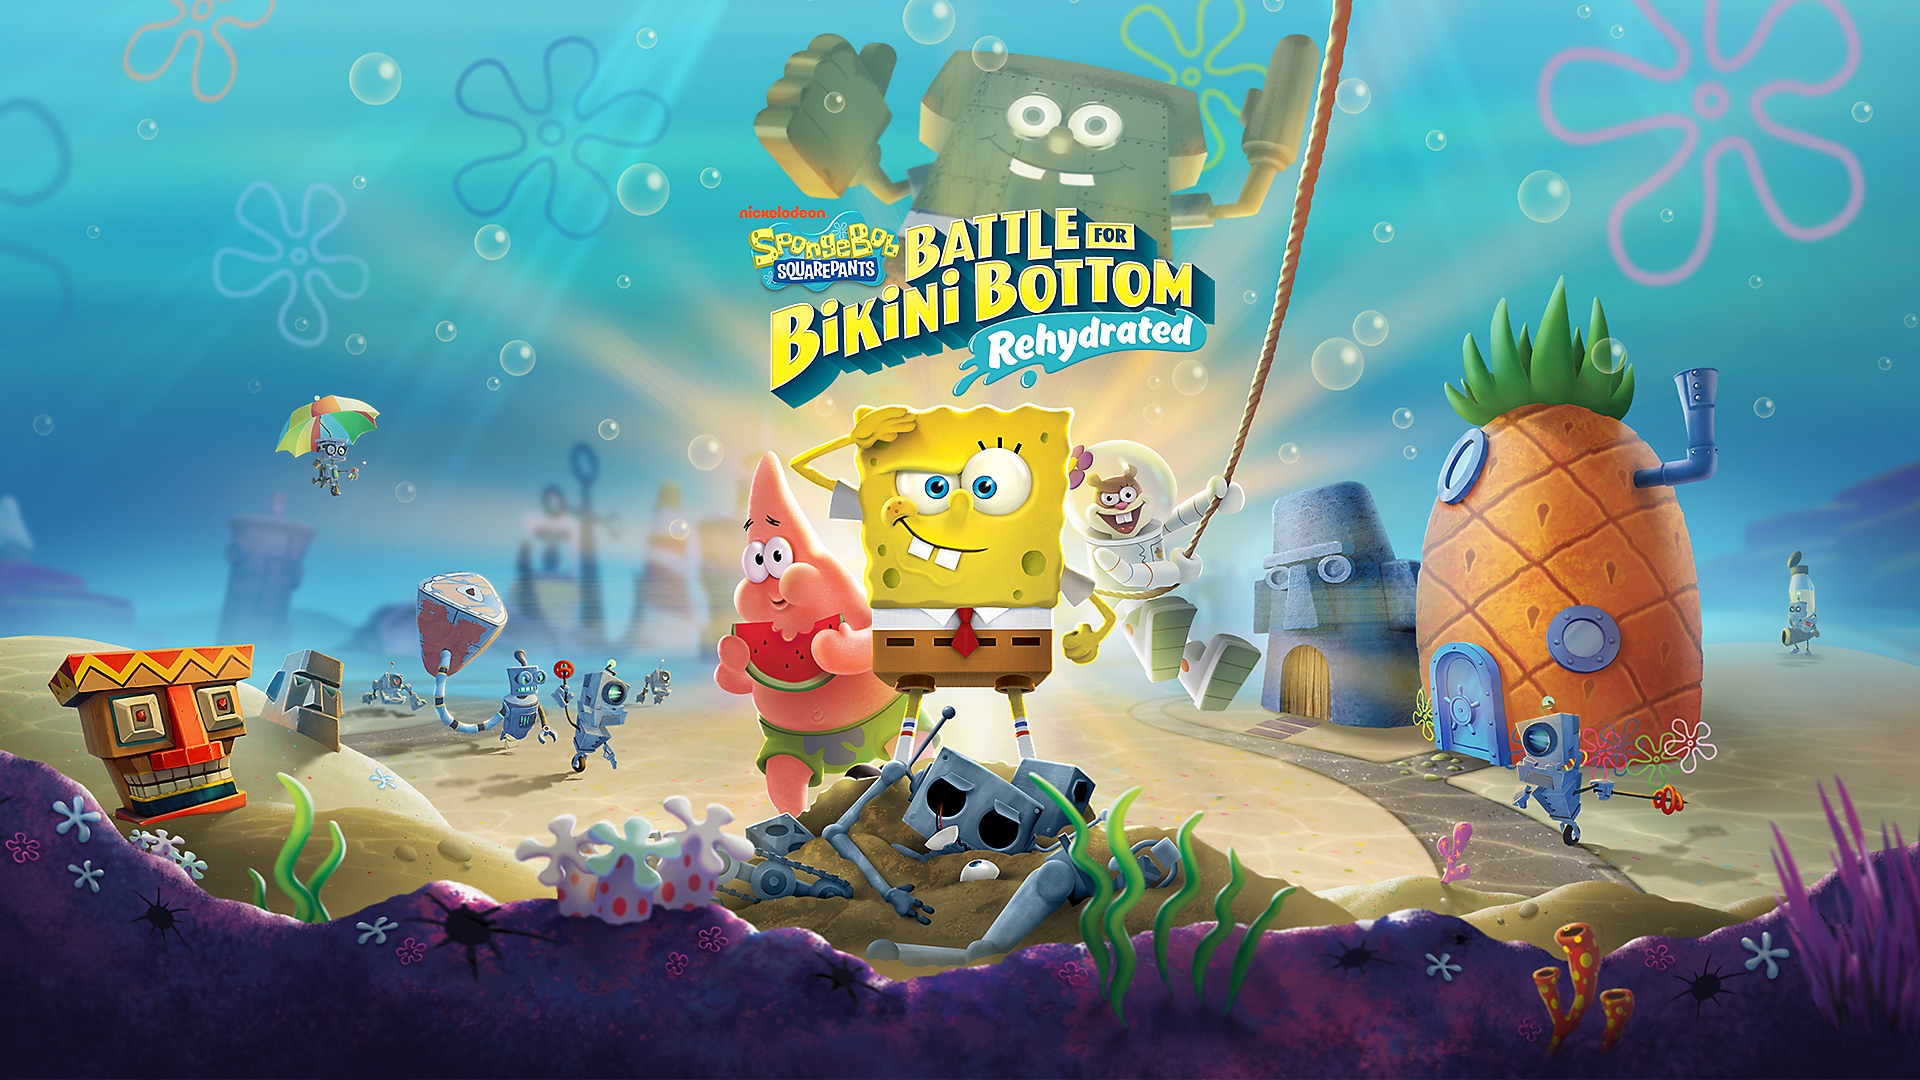 Bob l'éponge saluant pendant que Patrick mange un ananas à Bikini Bottom dans SpongeBob SquarePants: Battle For Bikini Bottom - Rehydrated sur PS4